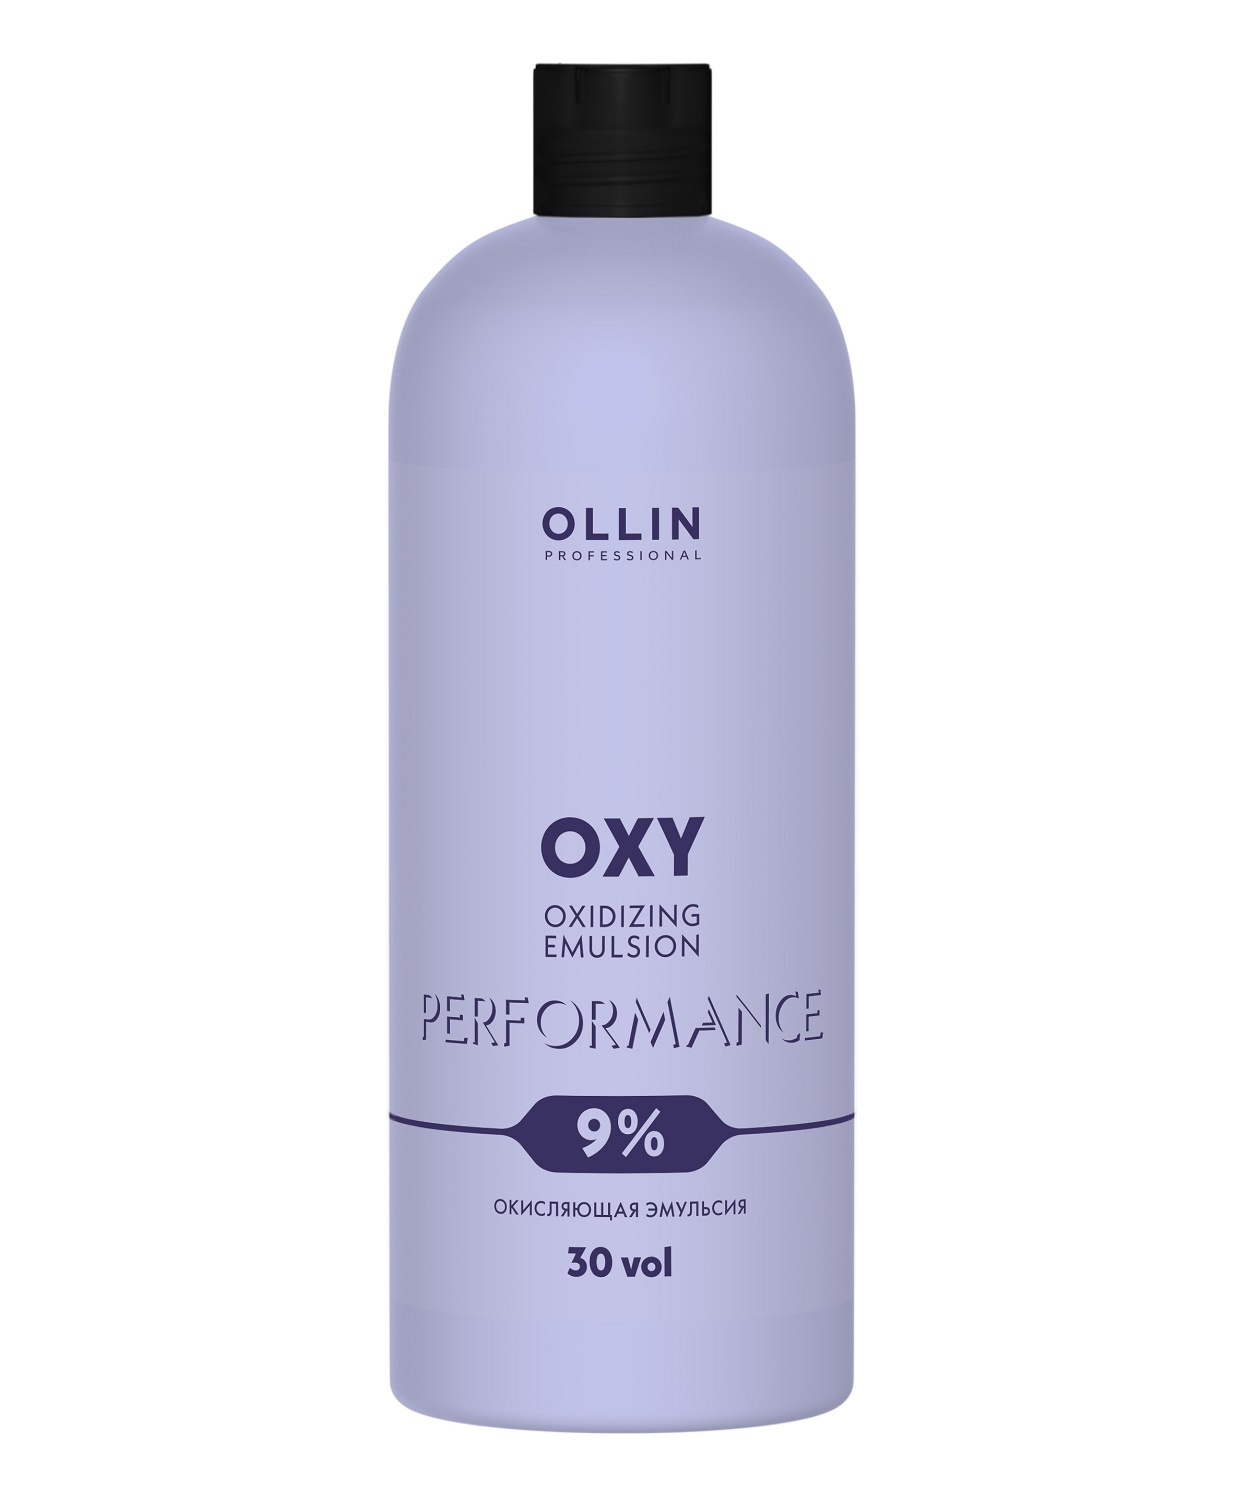 цена Ollin Professional Окисляющая эмульсия 9% 30 vol, 1000 мл (Ollin Professional, Performance)